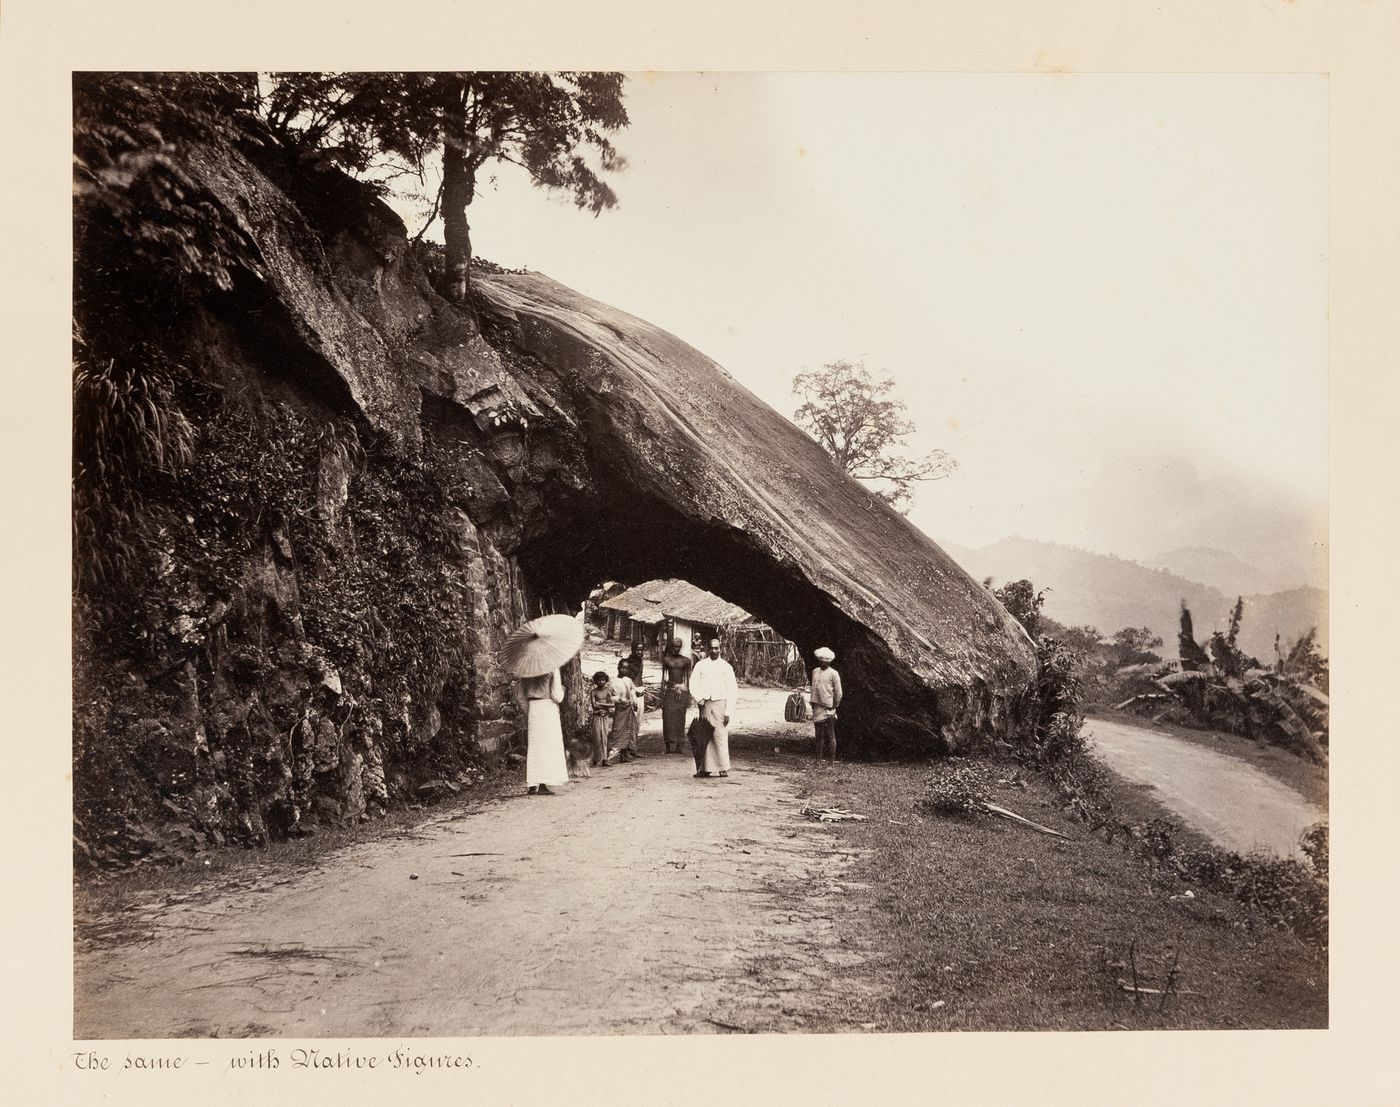 View of people, road and tunnel, Kadugannawa, Ceylon (now Sri Lanka)